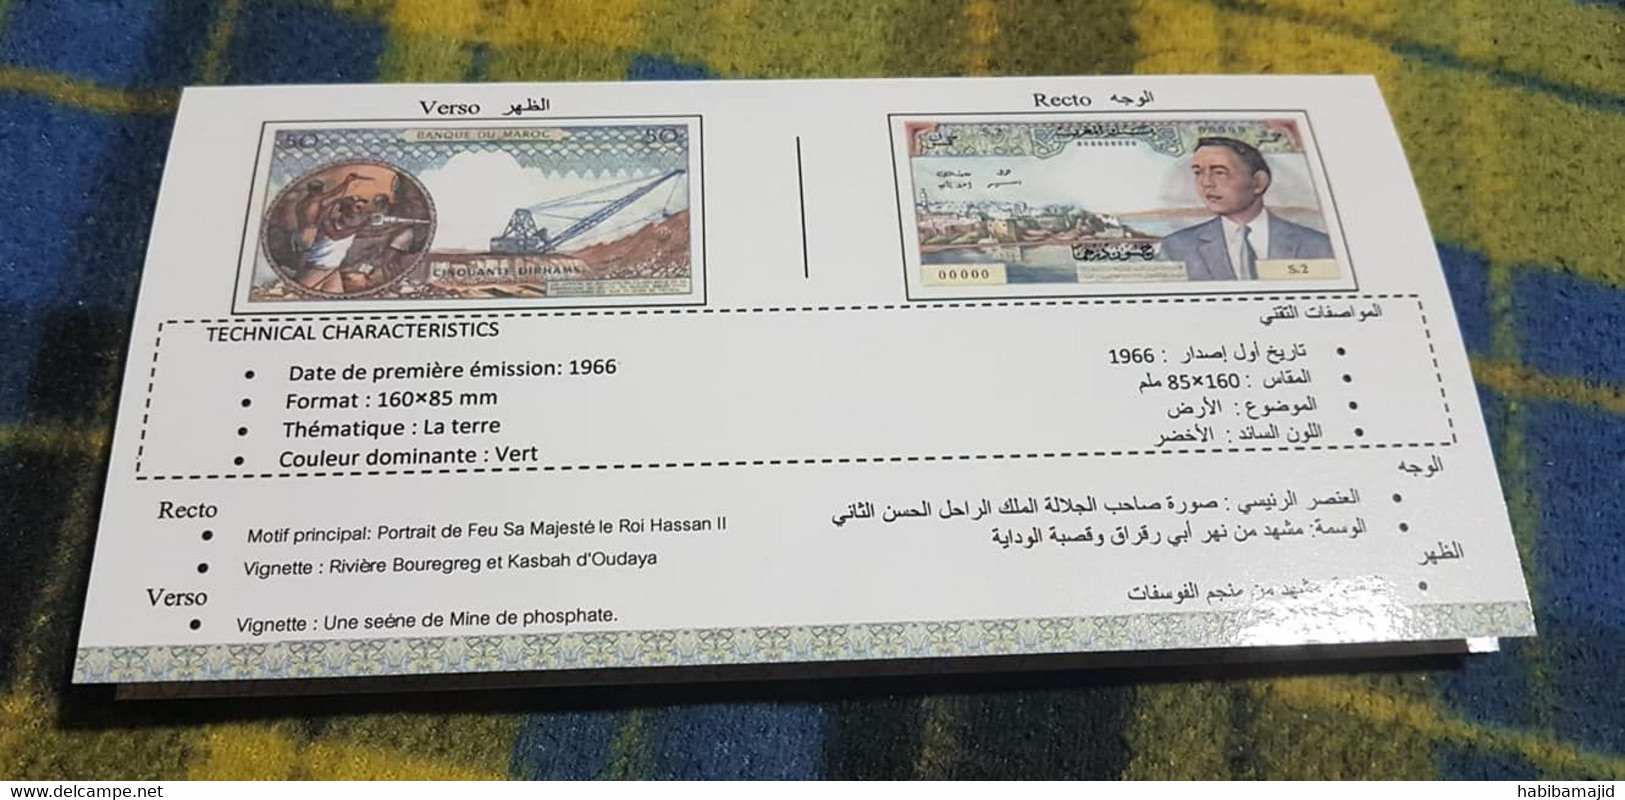 MAROC : Pochette (Vide) En Carton Pour Billet De 50 Dirhams 1968 - Maroc